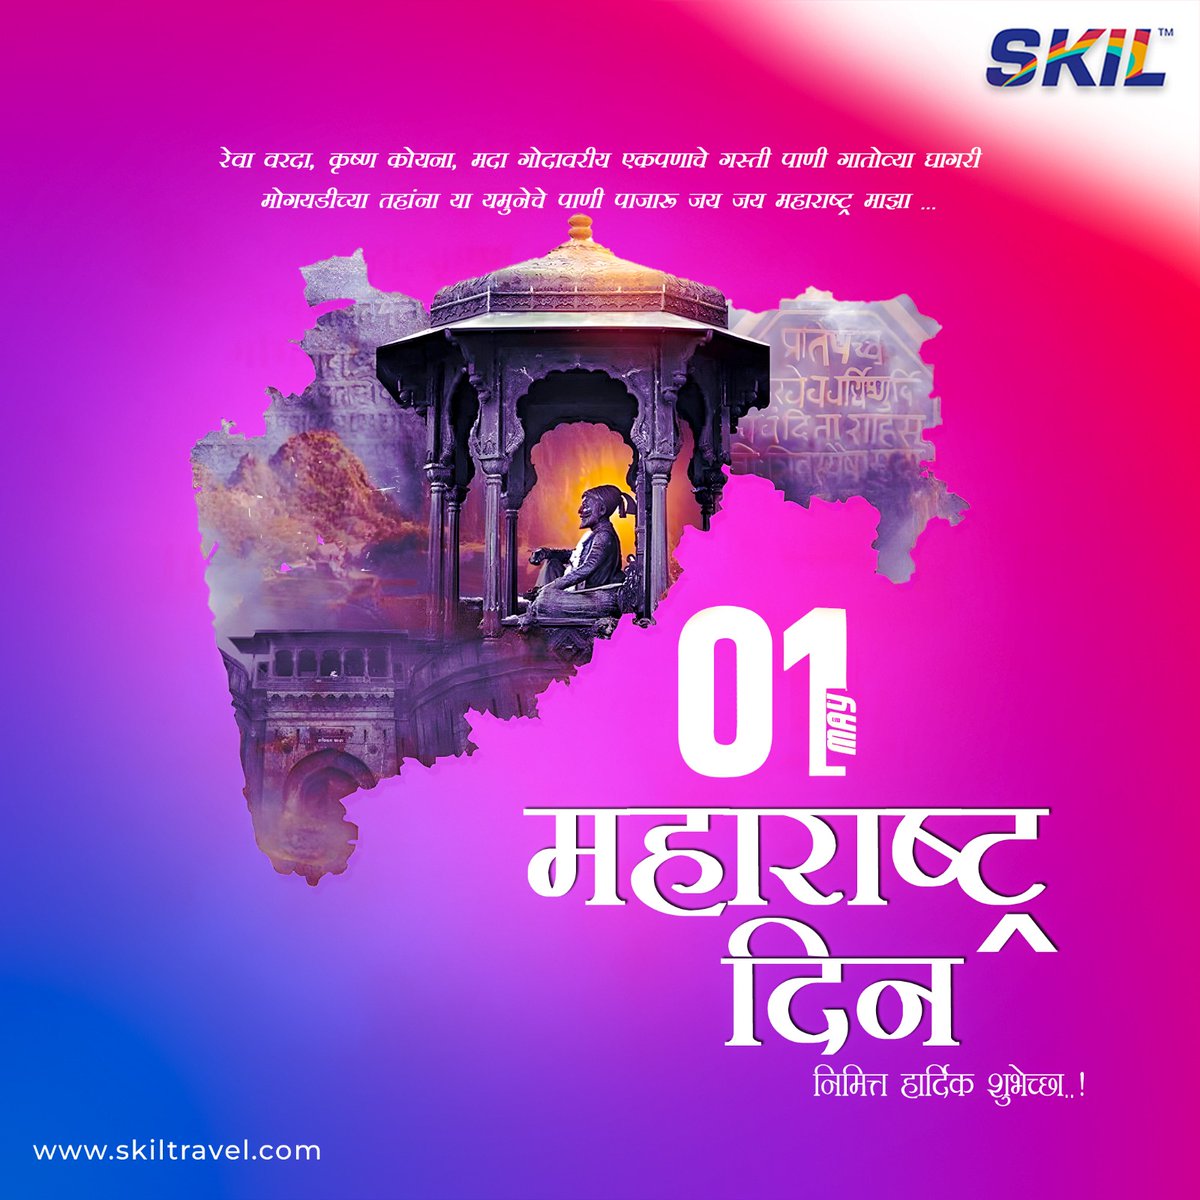 Today, let's honor and revel in the unique spirit of Maharashtra! 🎊
#SKIL #SKILTravel #maharashtraday #maharashtra #labourday #maharashtradin #maharashtrian #marathi #mumbai #corporatetravel #businesstravel #bestservices